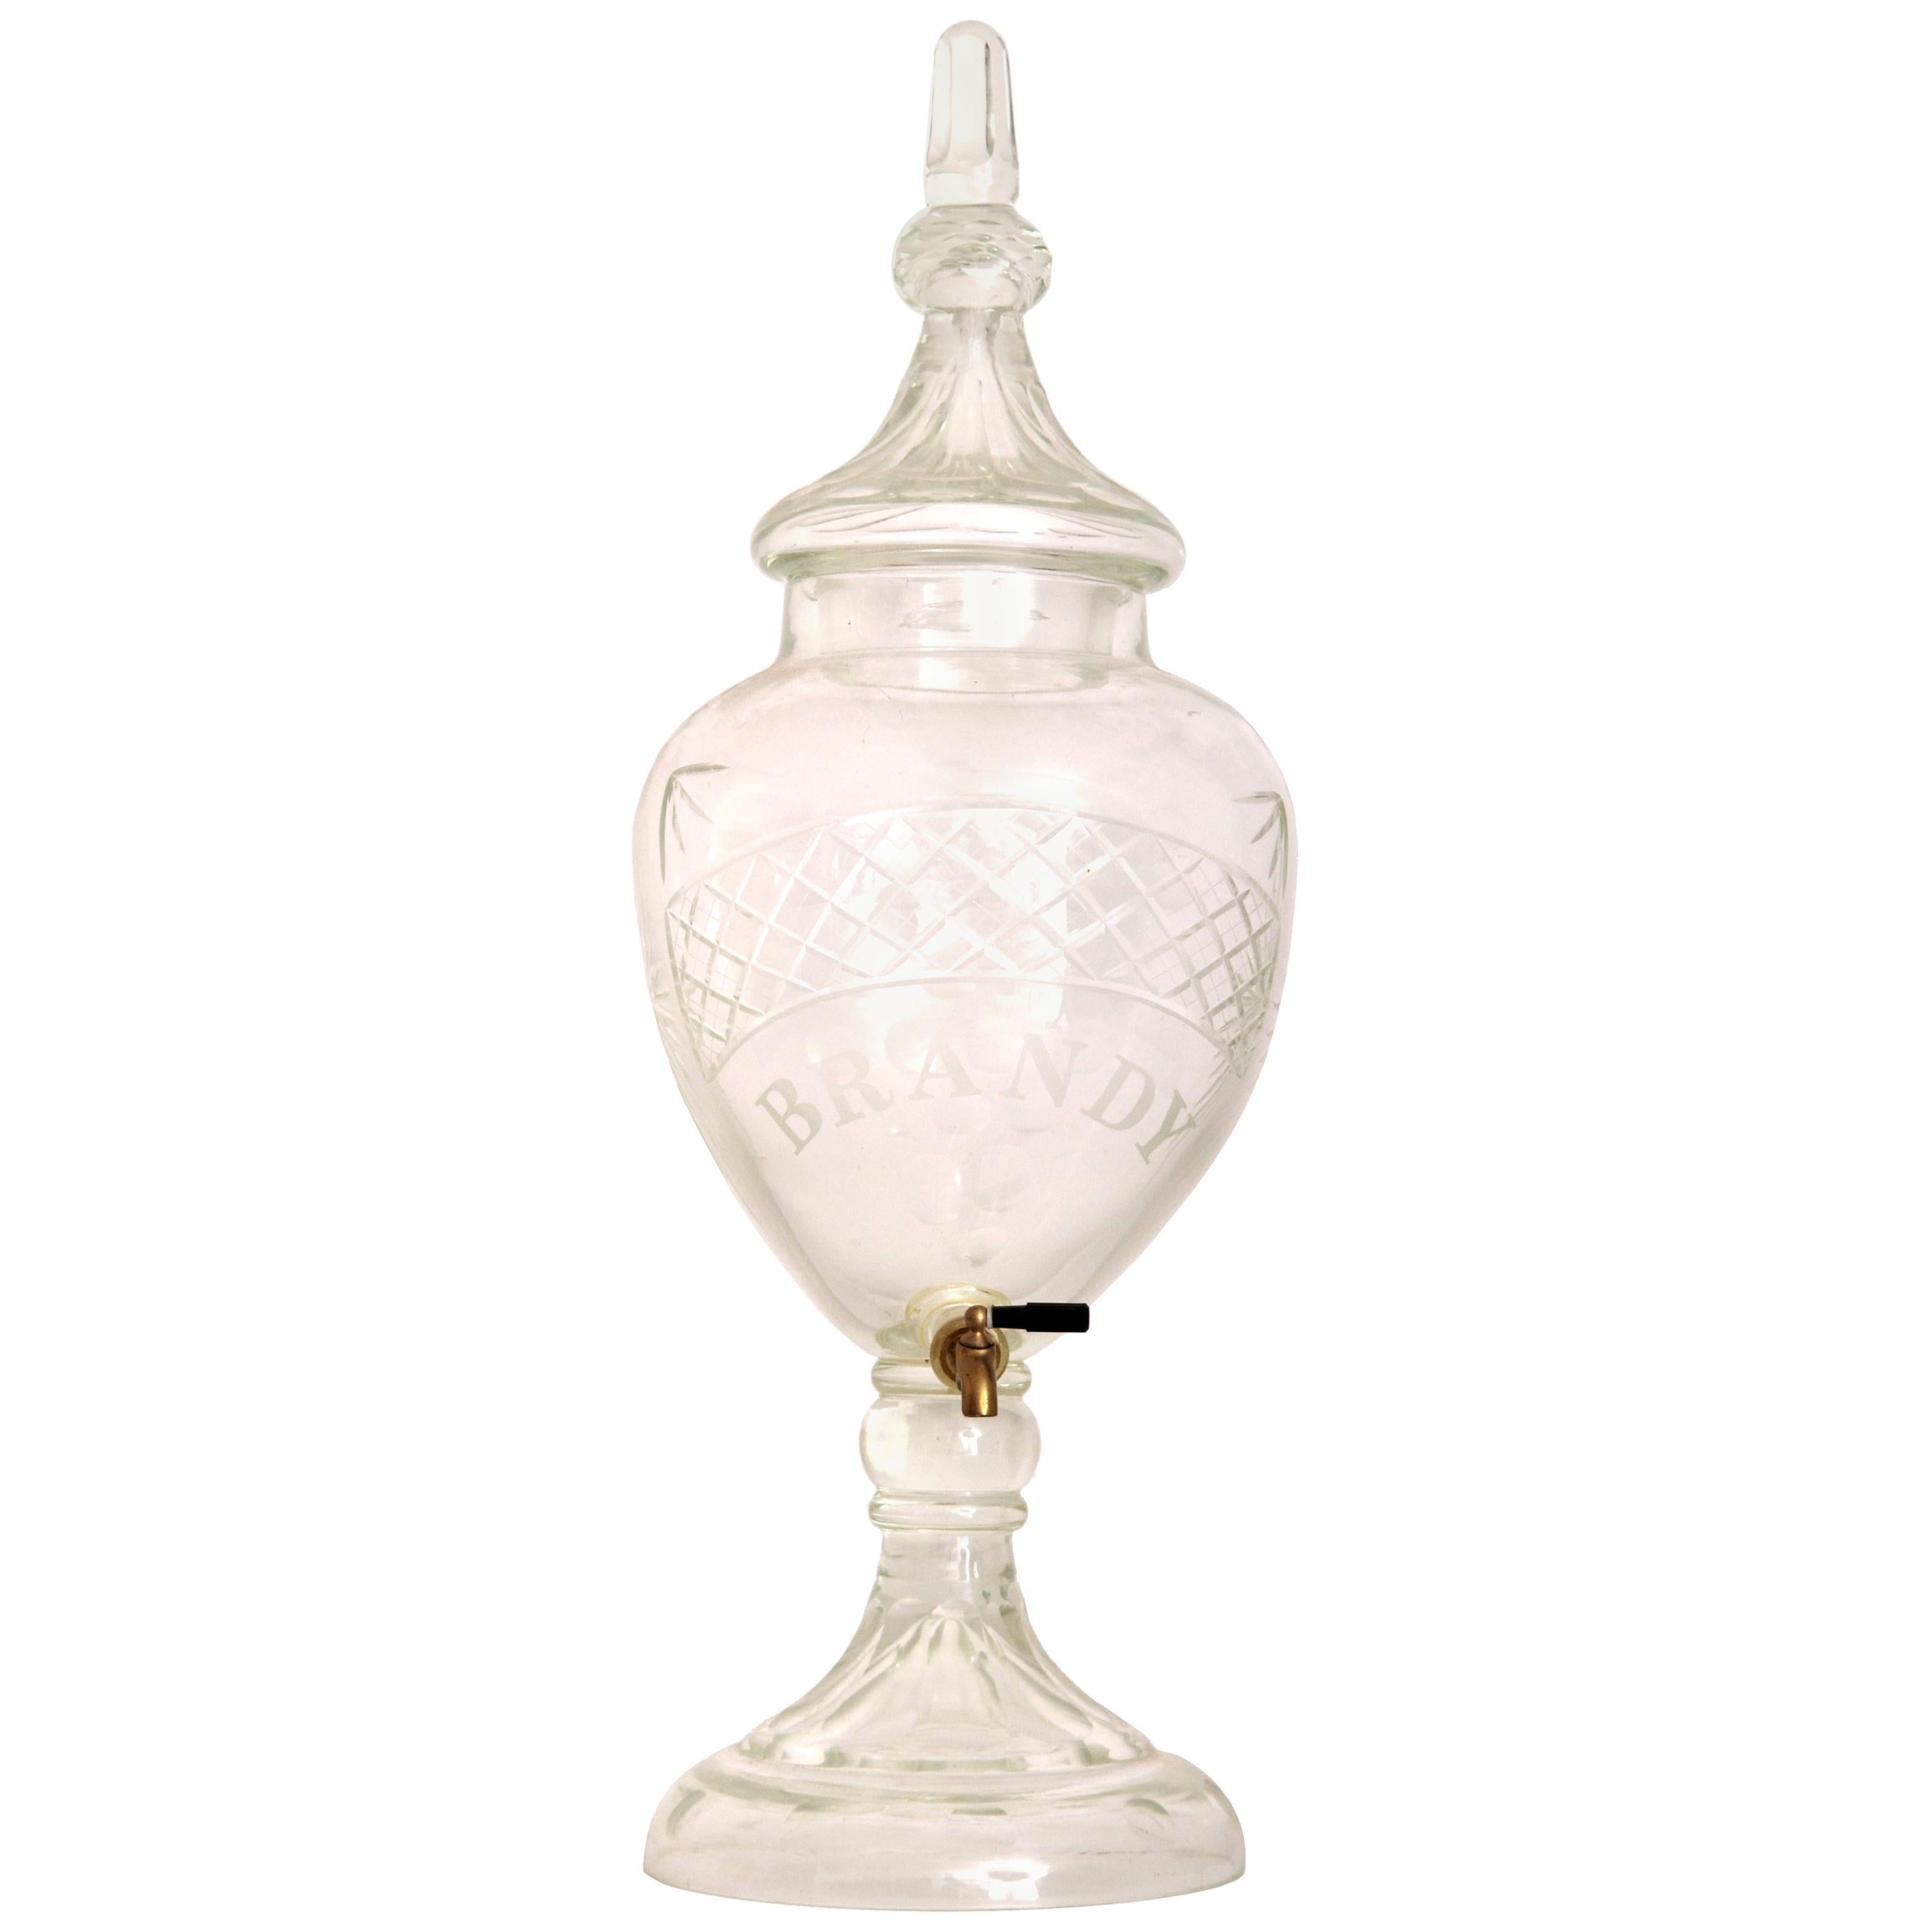 Monumental Antique Cut Crystal Glass Brandy Liquor Dispenser Decanter circa 1880